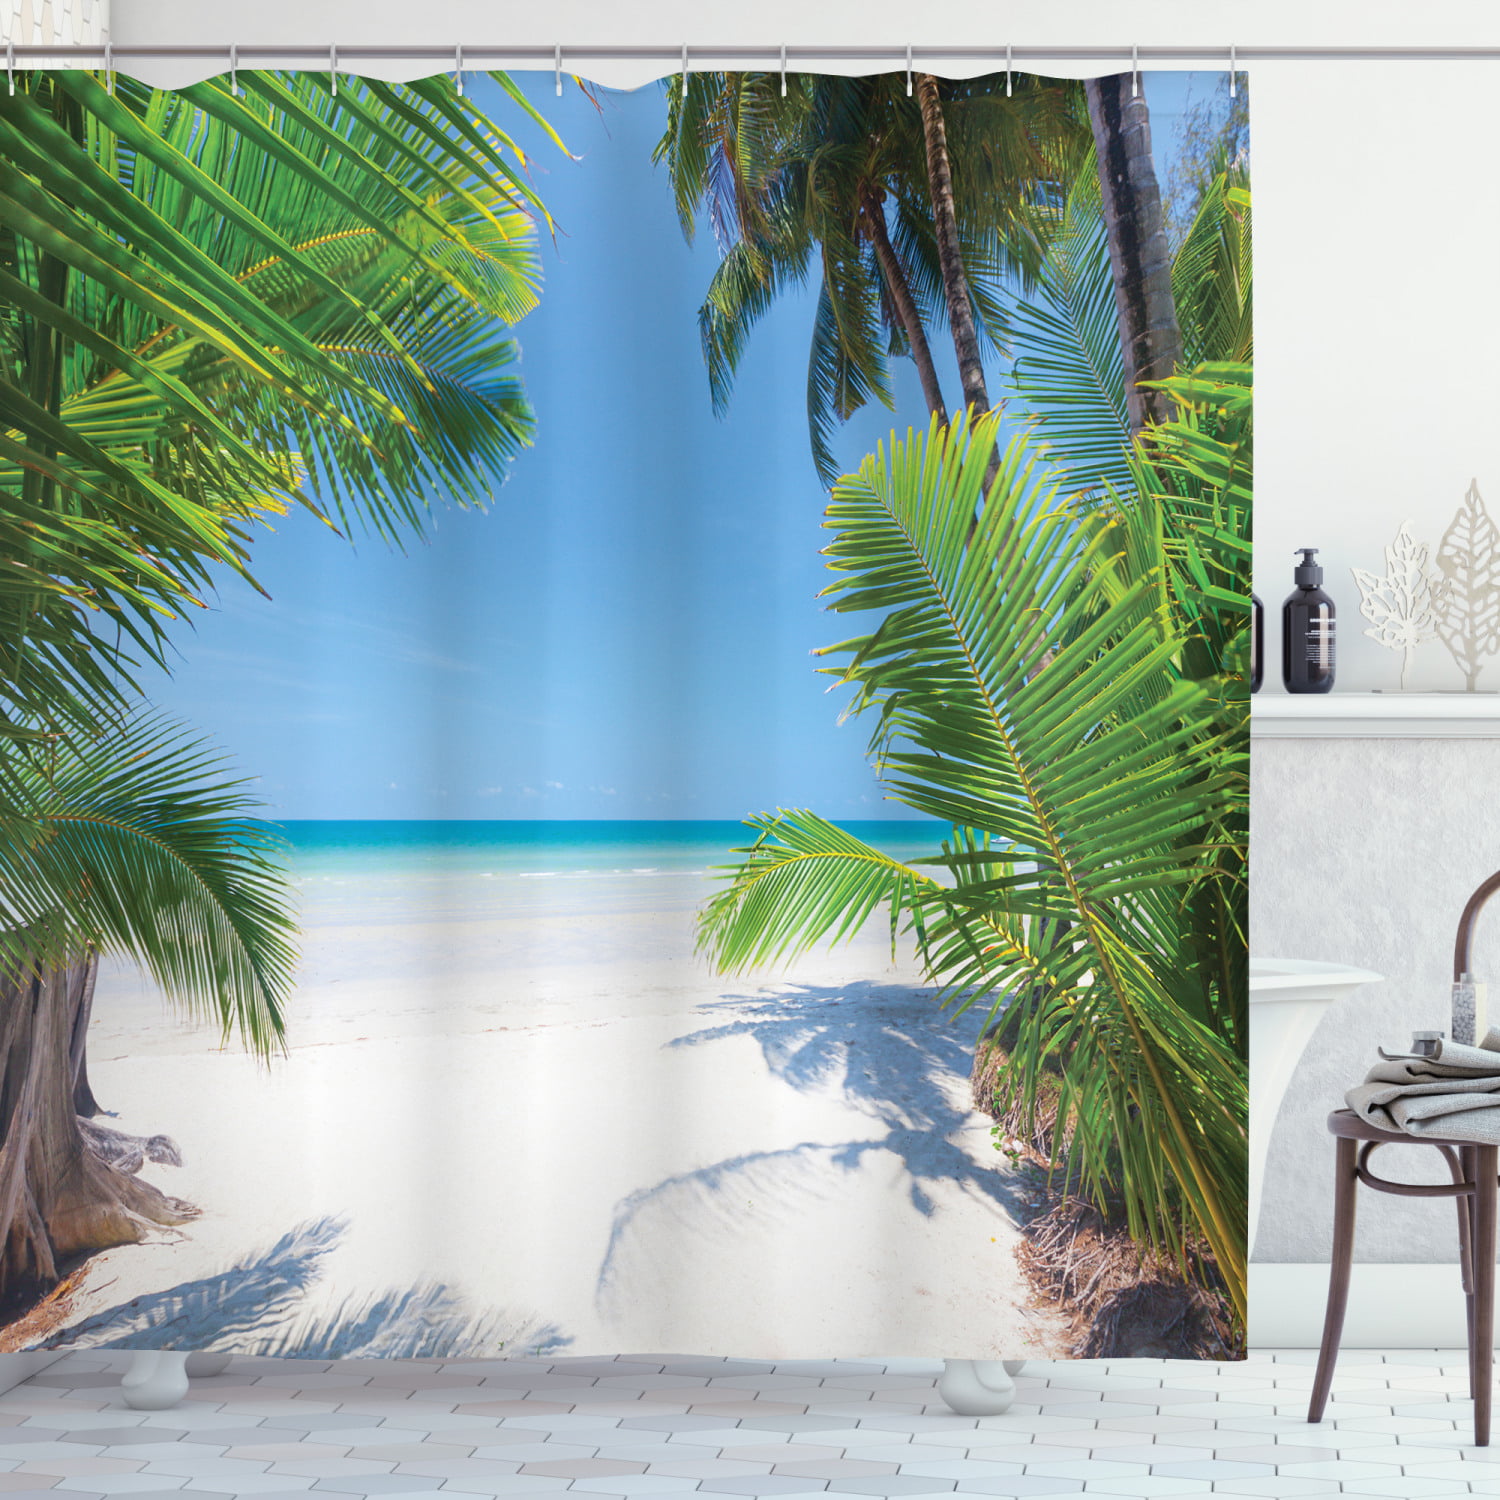 Details about   Sea Beach Vacation Shower Curtain Tropical Landscape Fabric Bath Curtains 